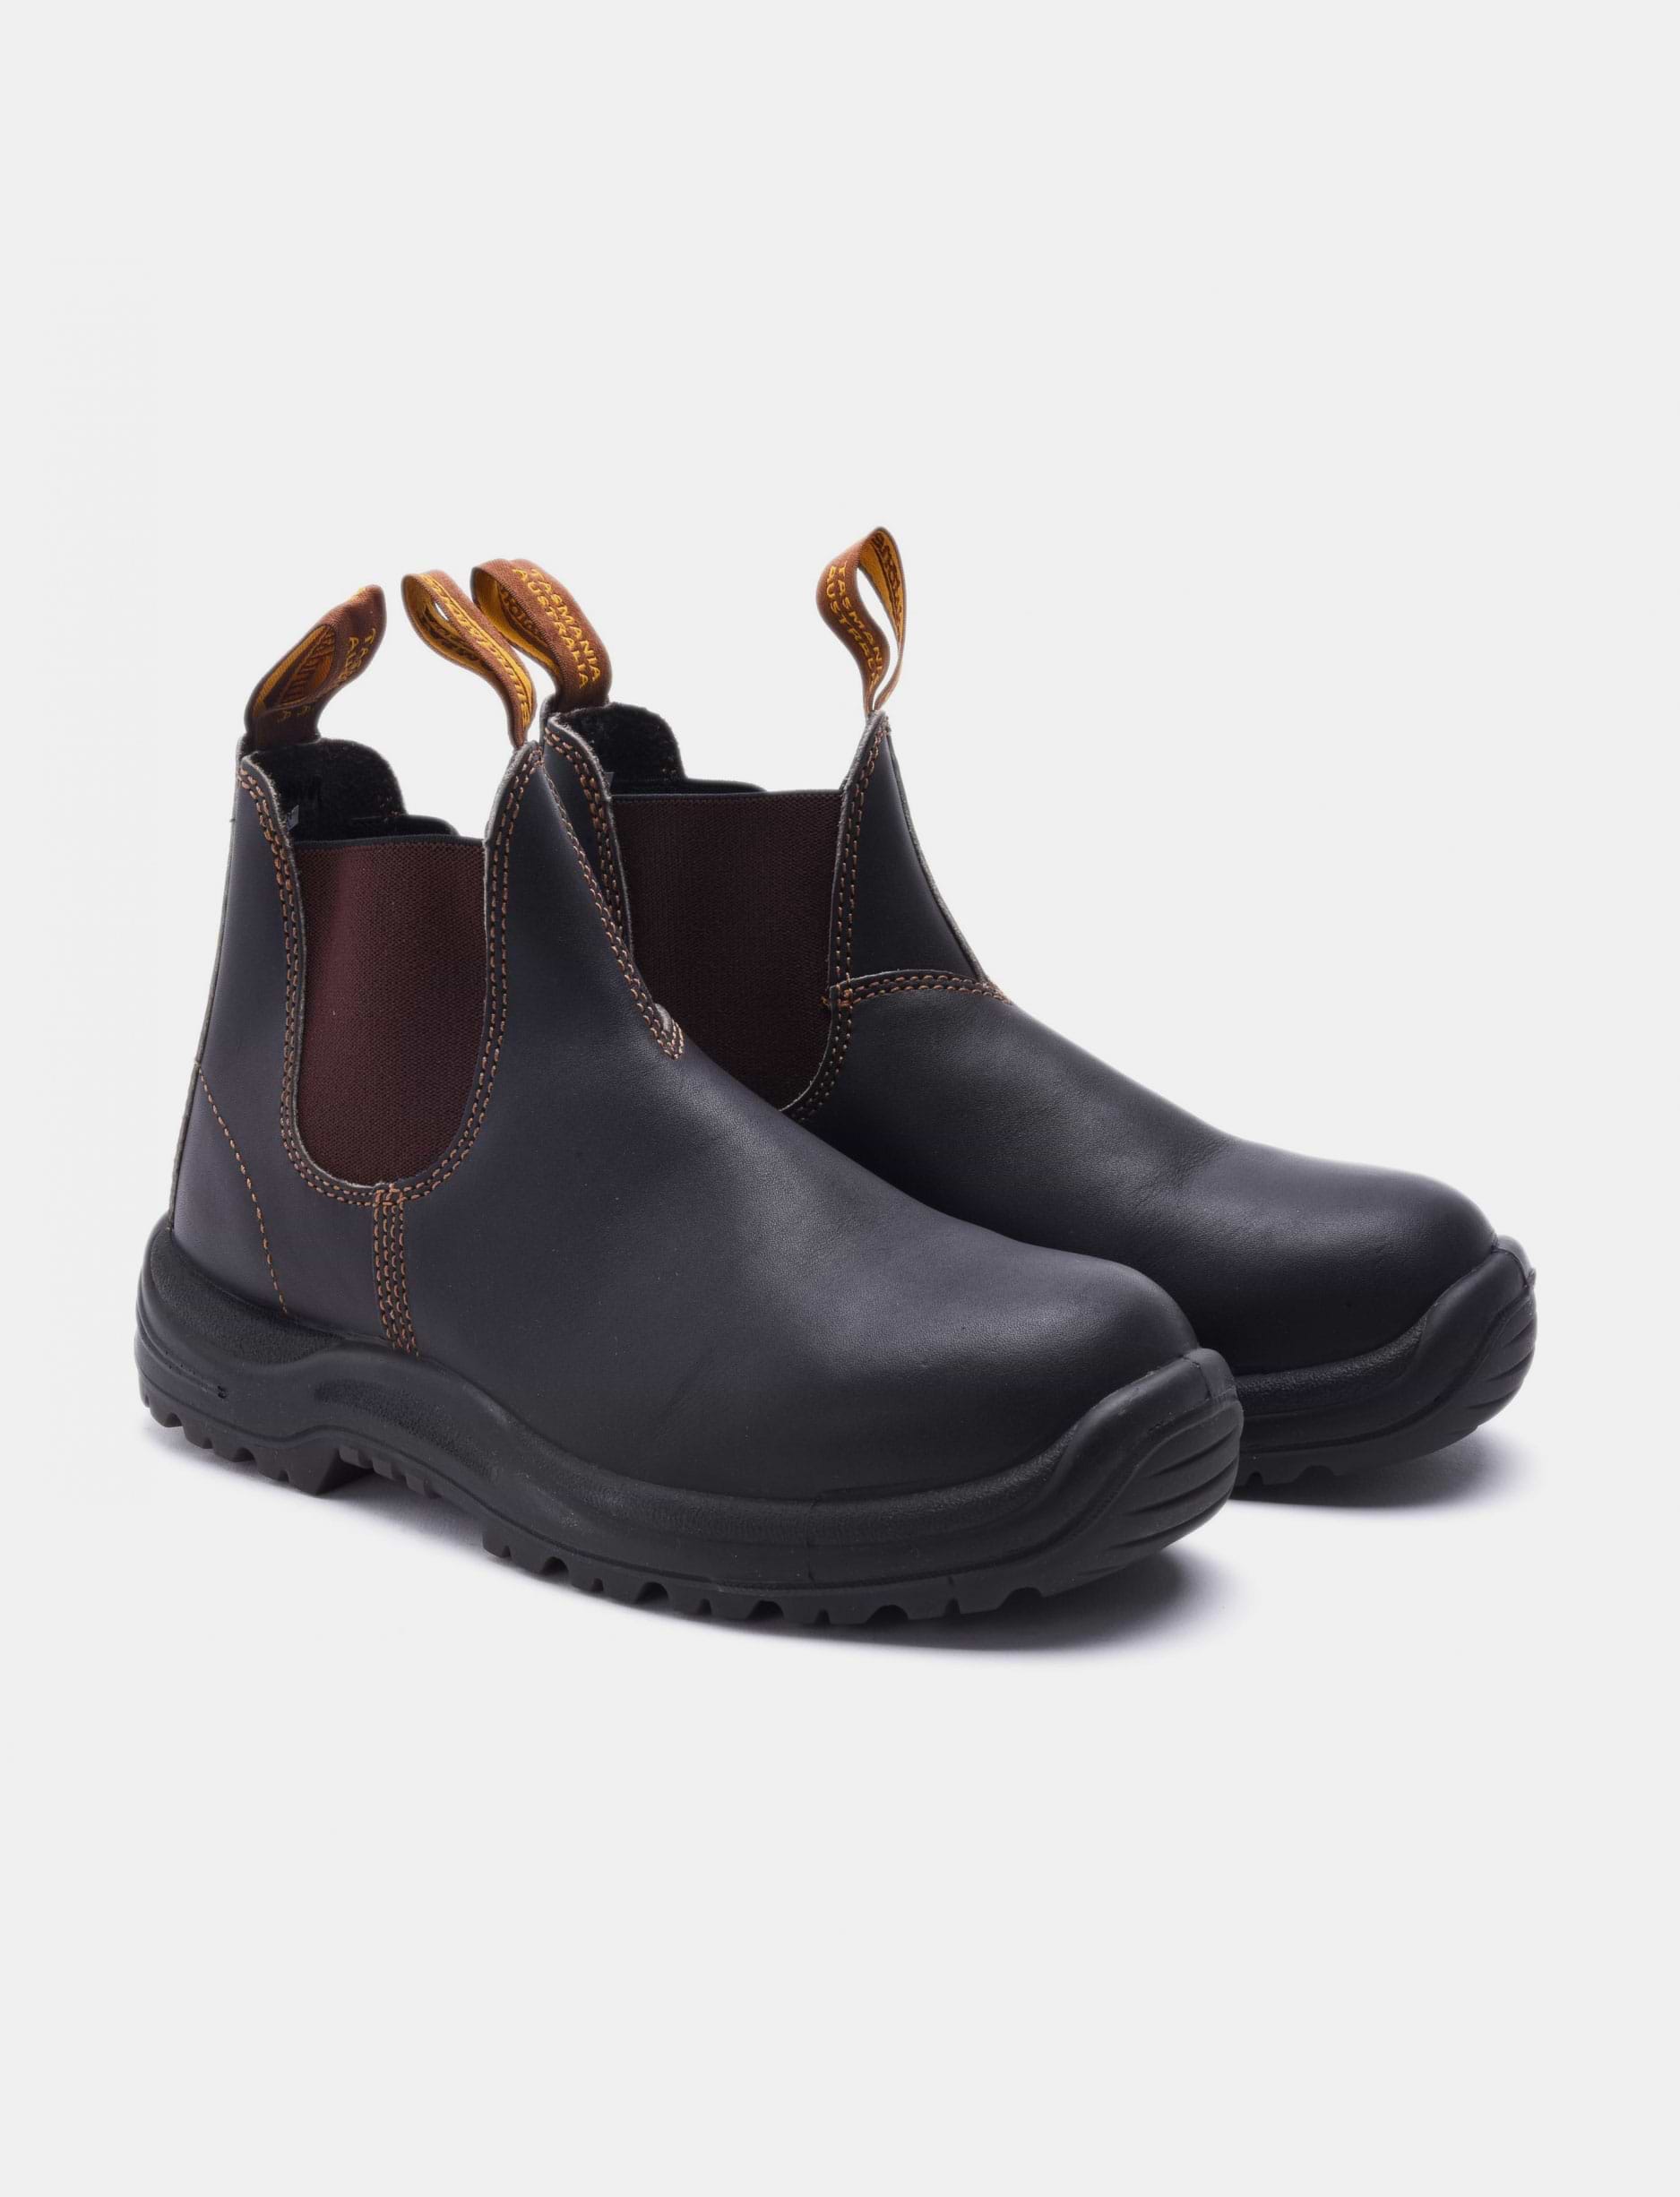 Blundstone 192 -נעלי בלנסטון גברים 192 בצבע חום כהה